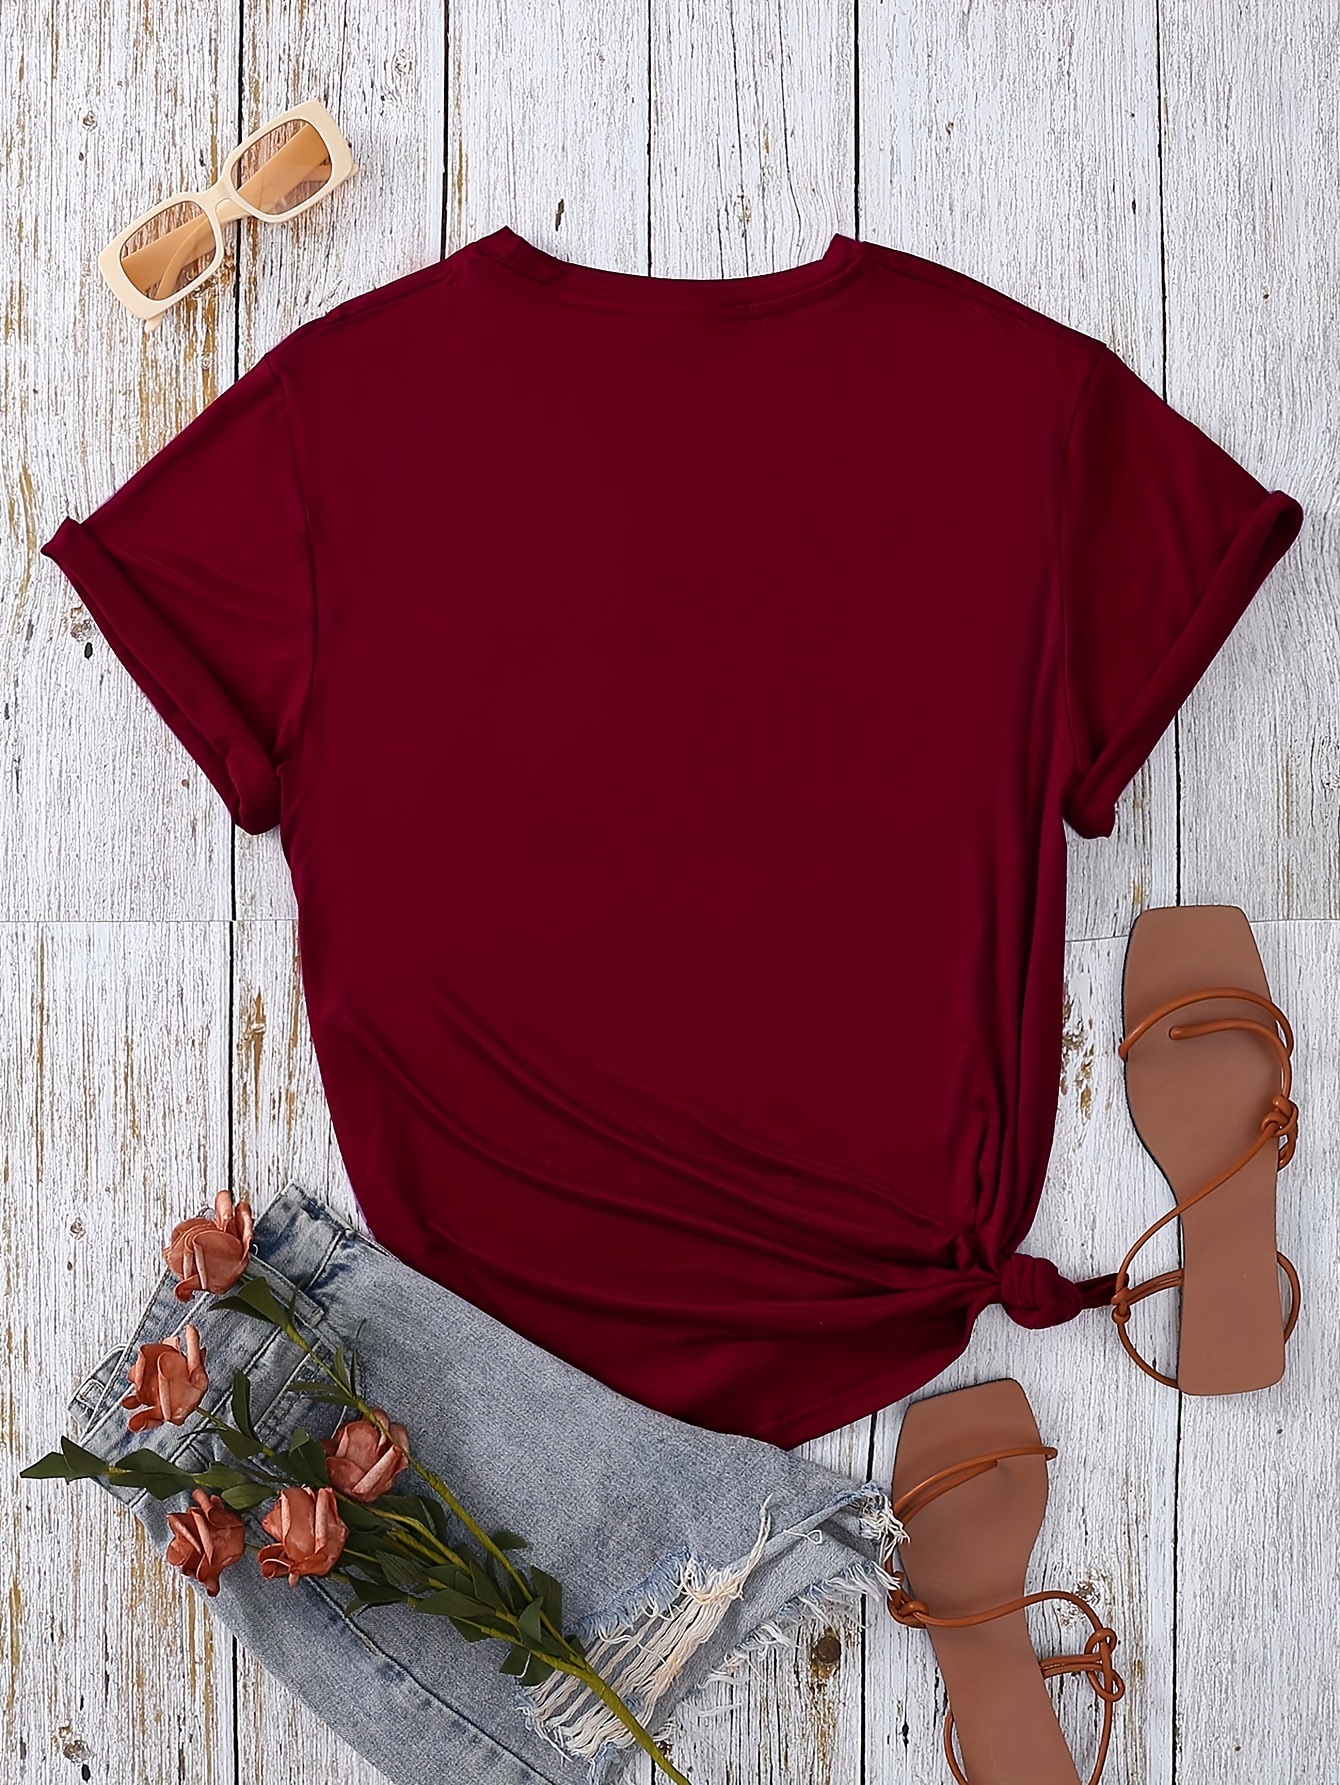 Women's Plus Size Tops T shirt Floral Print Short Sleeve Crewneck Shein 0XL